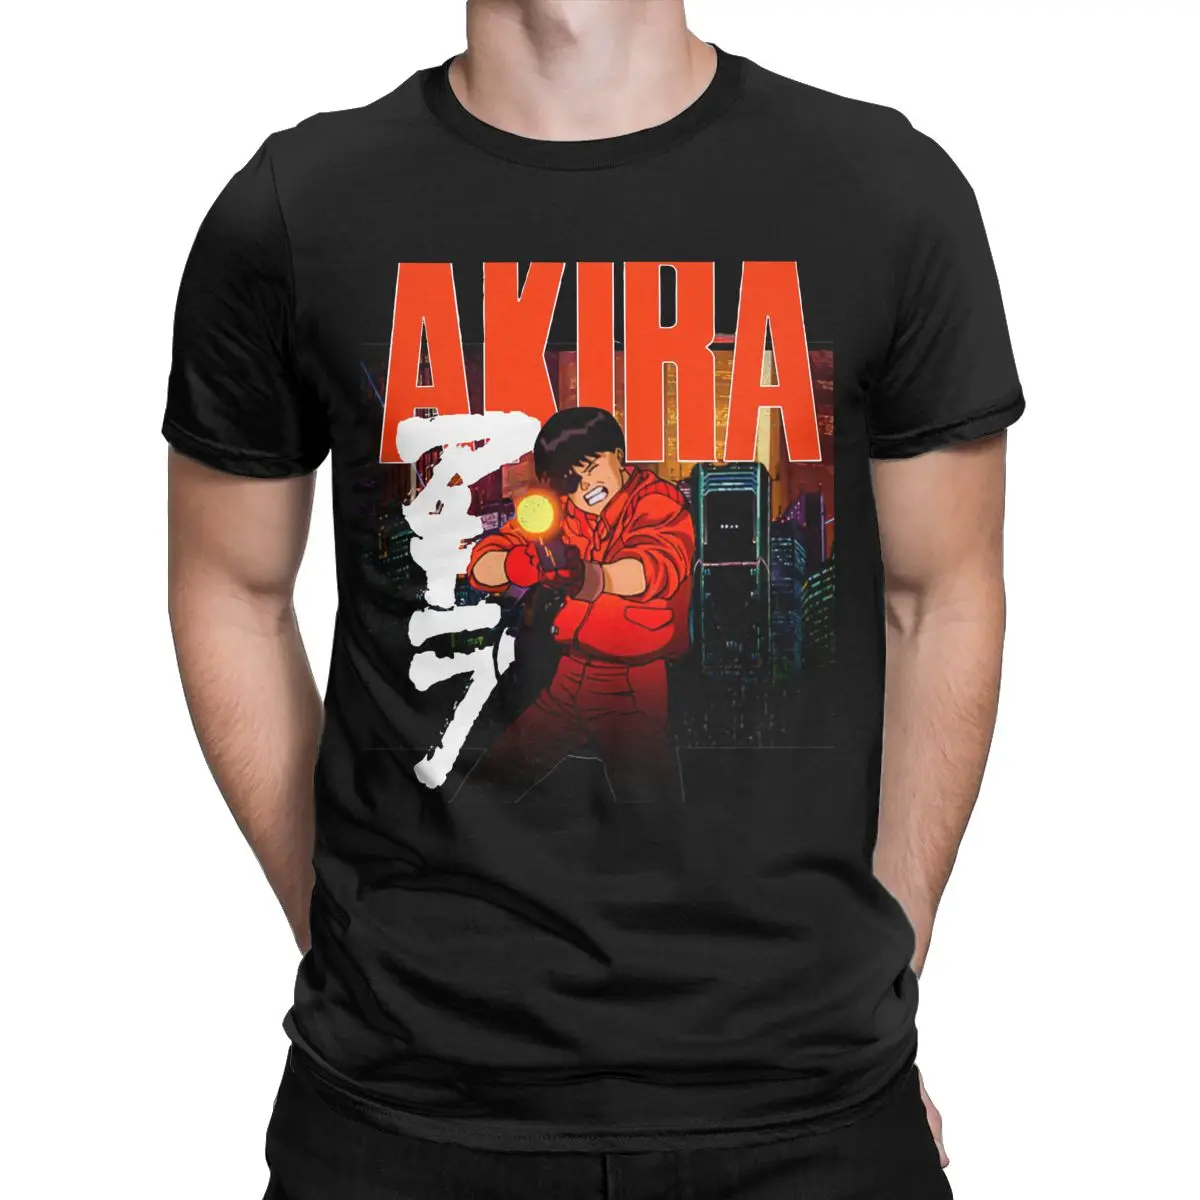 

Akira Japanese City Explosion t shirt for men Pure Cotton Funny T-Shirts Crew Neck anime Tee Short Sleeve Clothing Gift Idea